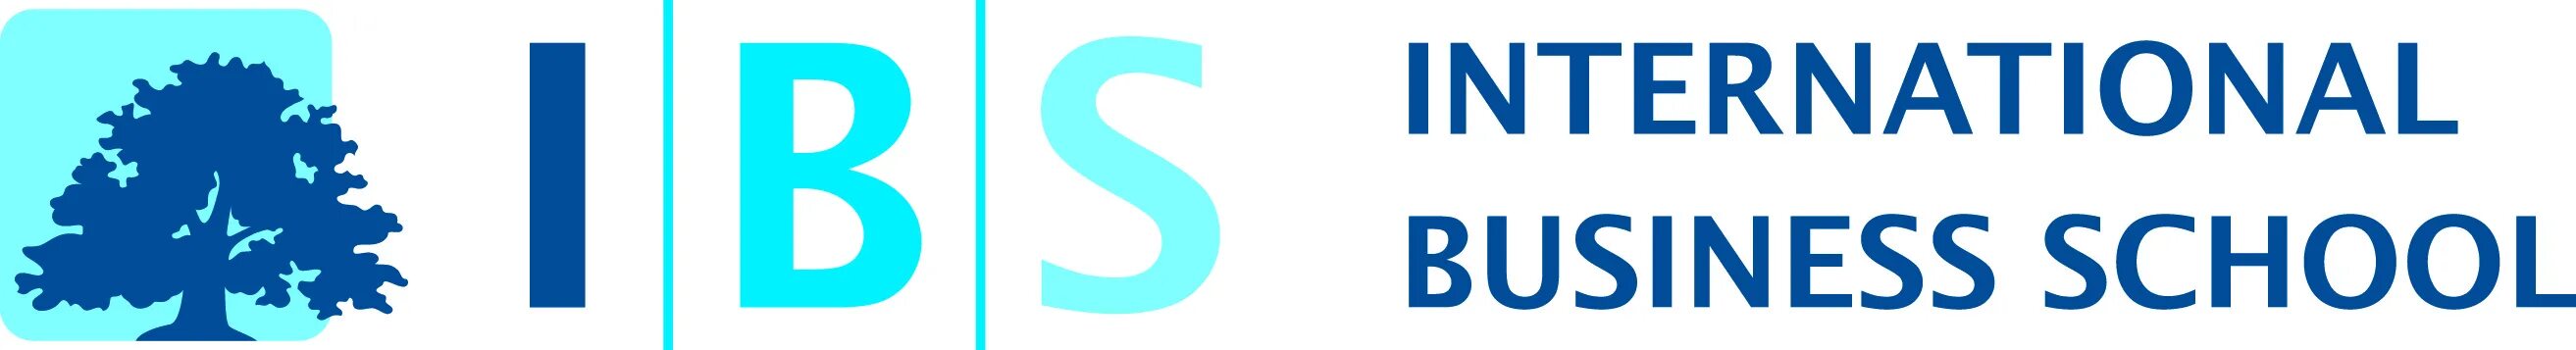 Ibs bank. International Business School. IBS International Business School. International Business School логотип. Логотип Budapest Business School.